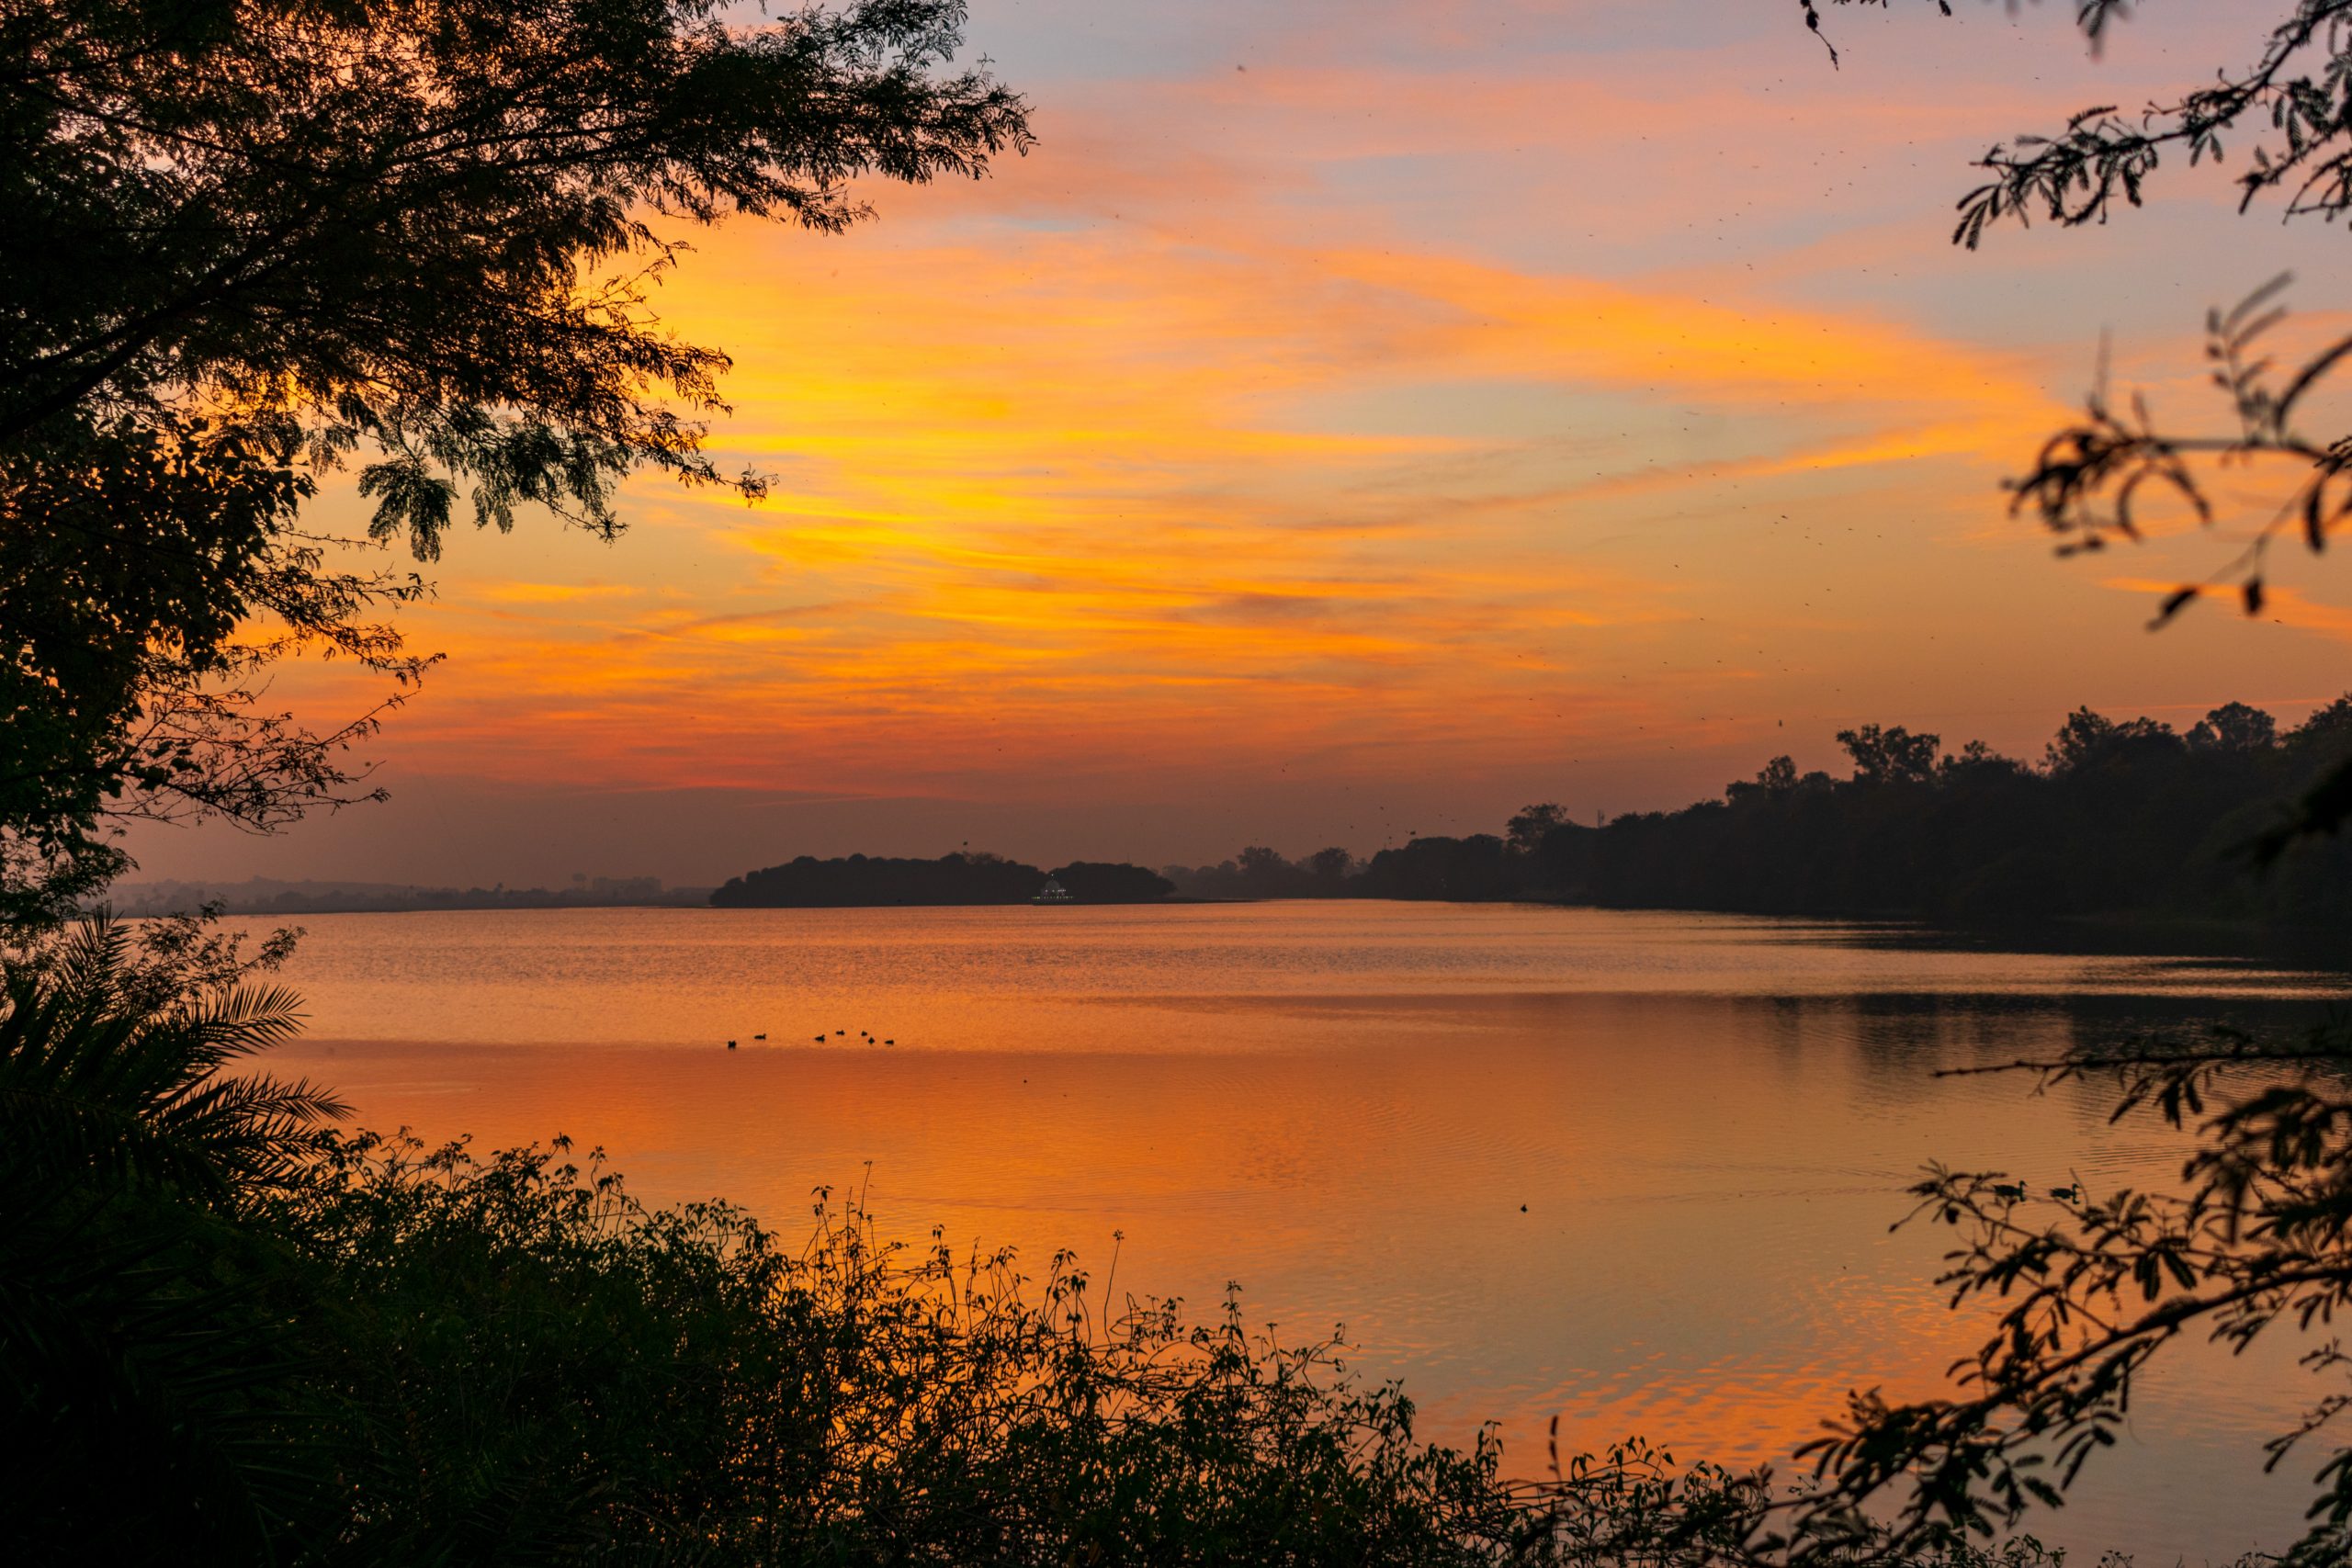 Peaceful sunset at Sirpur lake, Indore.